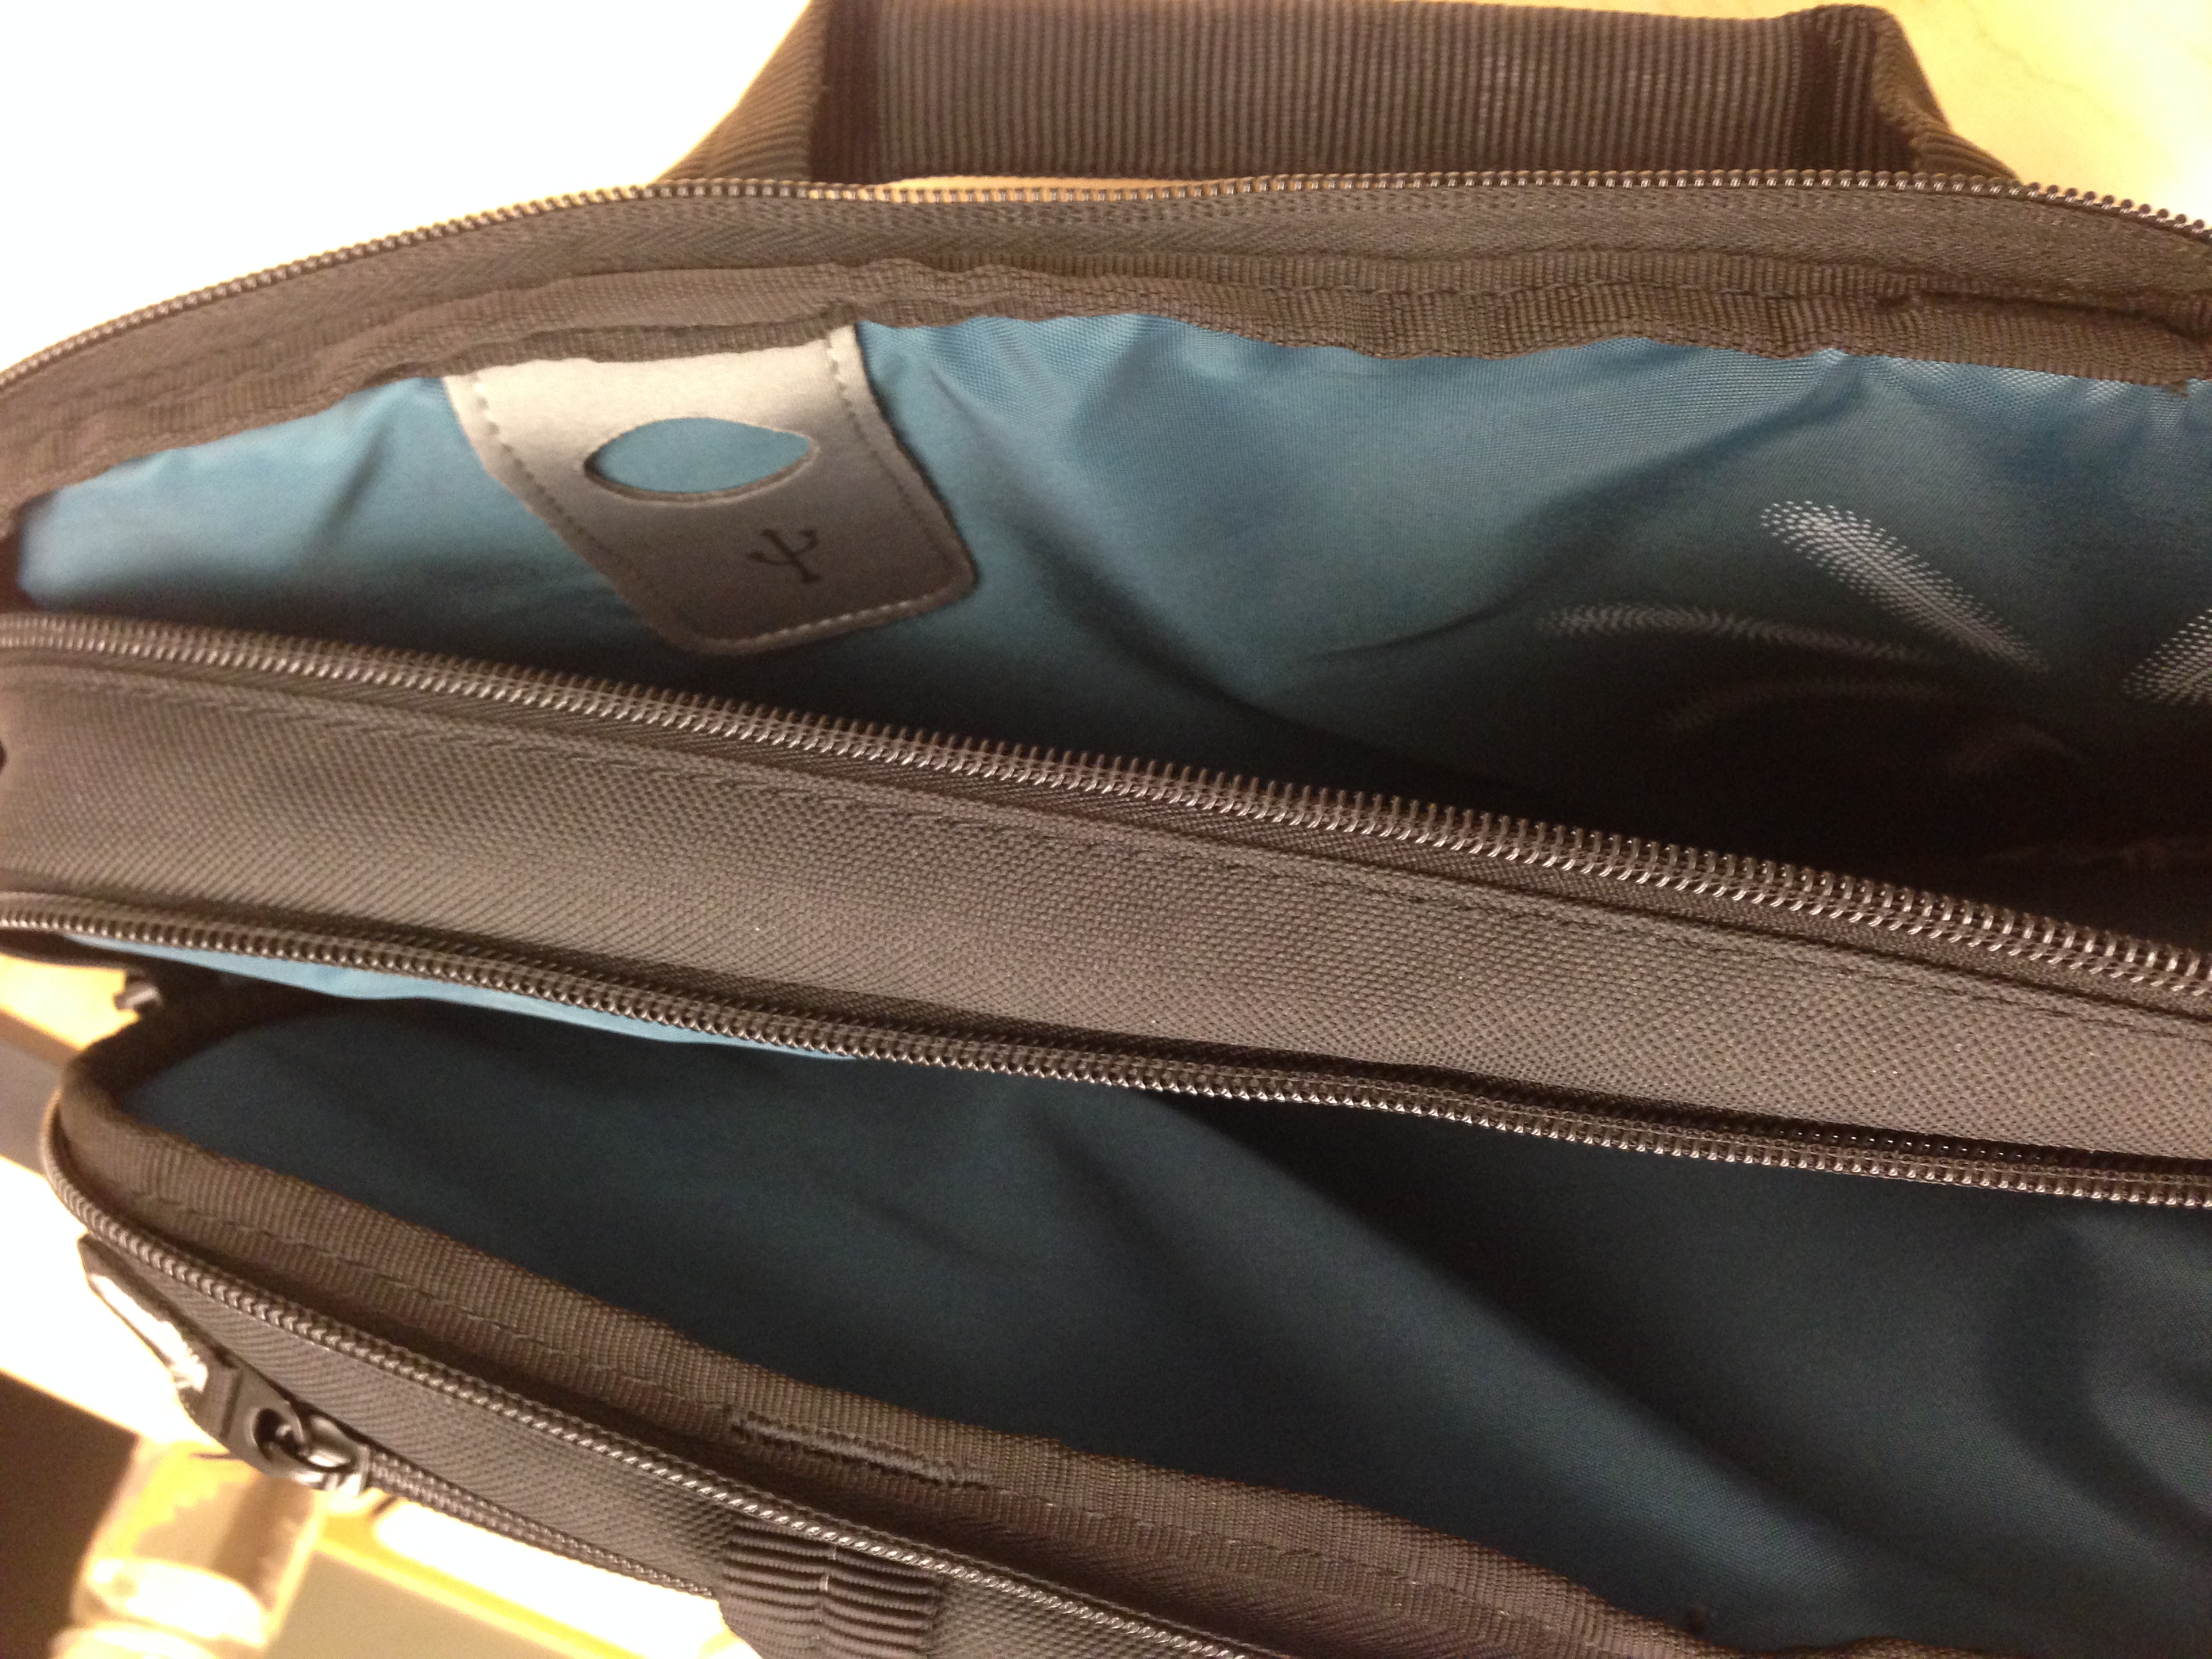 MacBook Pro Carrying Case Inside